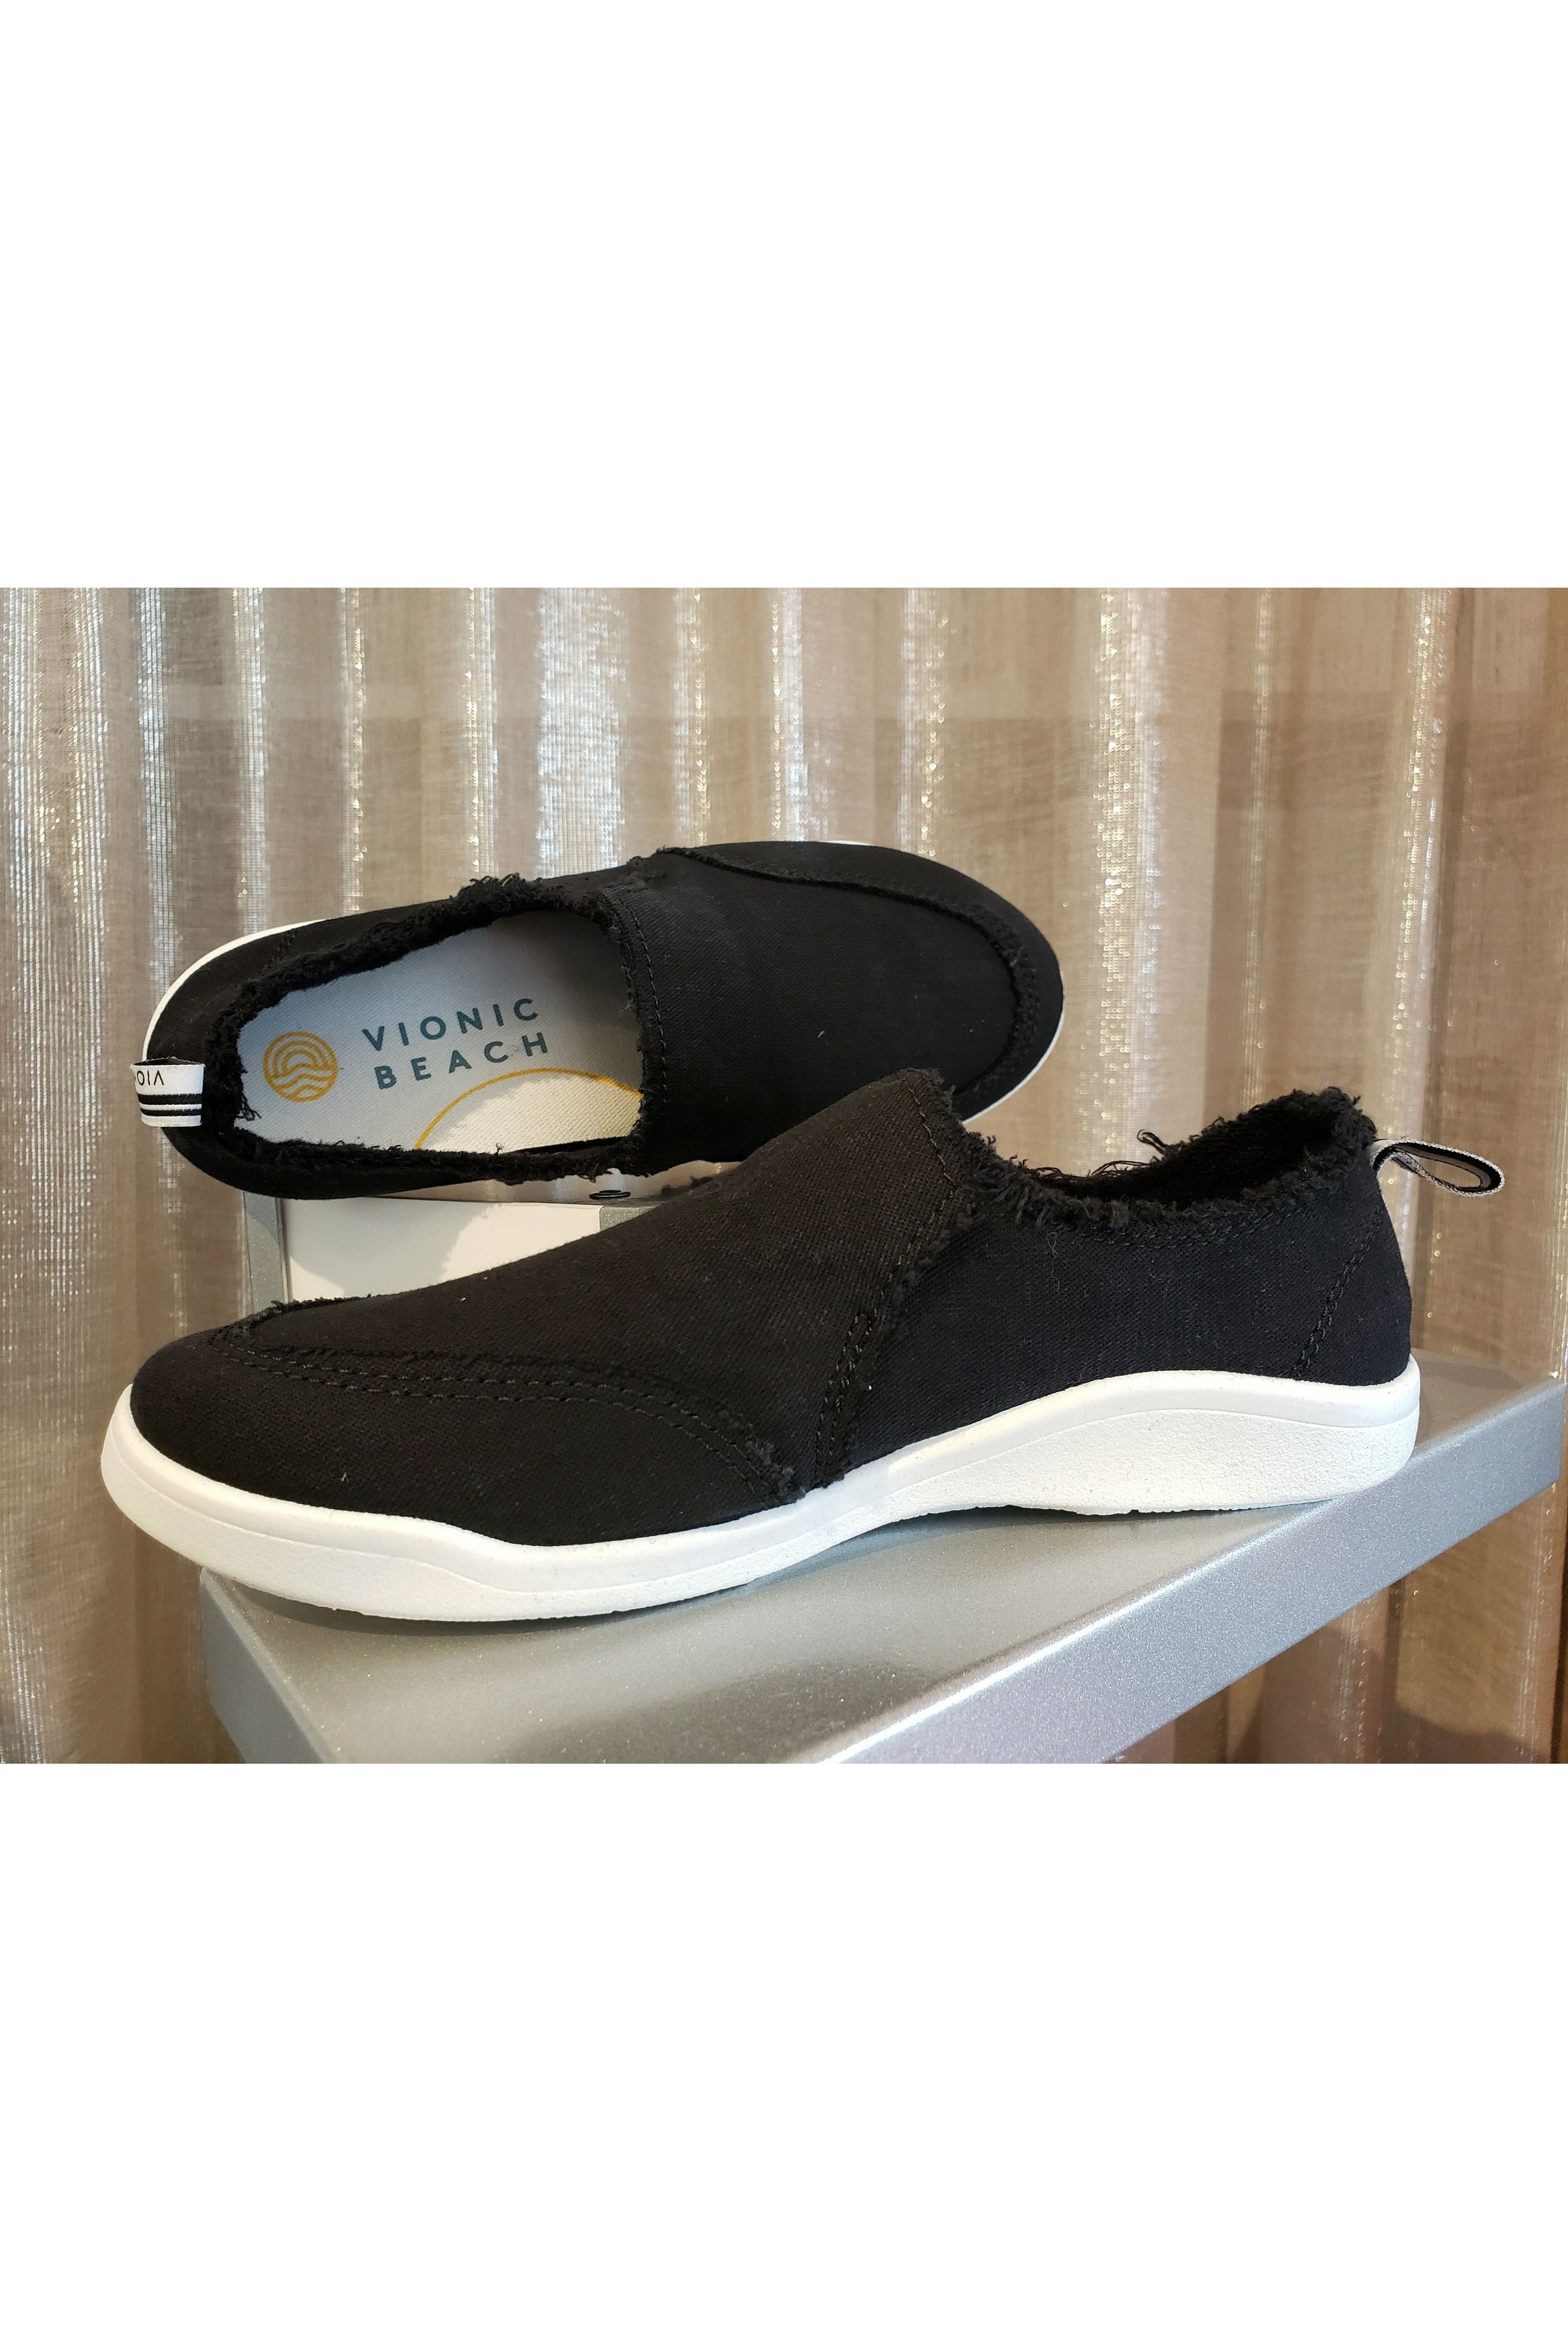 Vionic Canvas Slip On Shoes - Style Malibu, pair, black